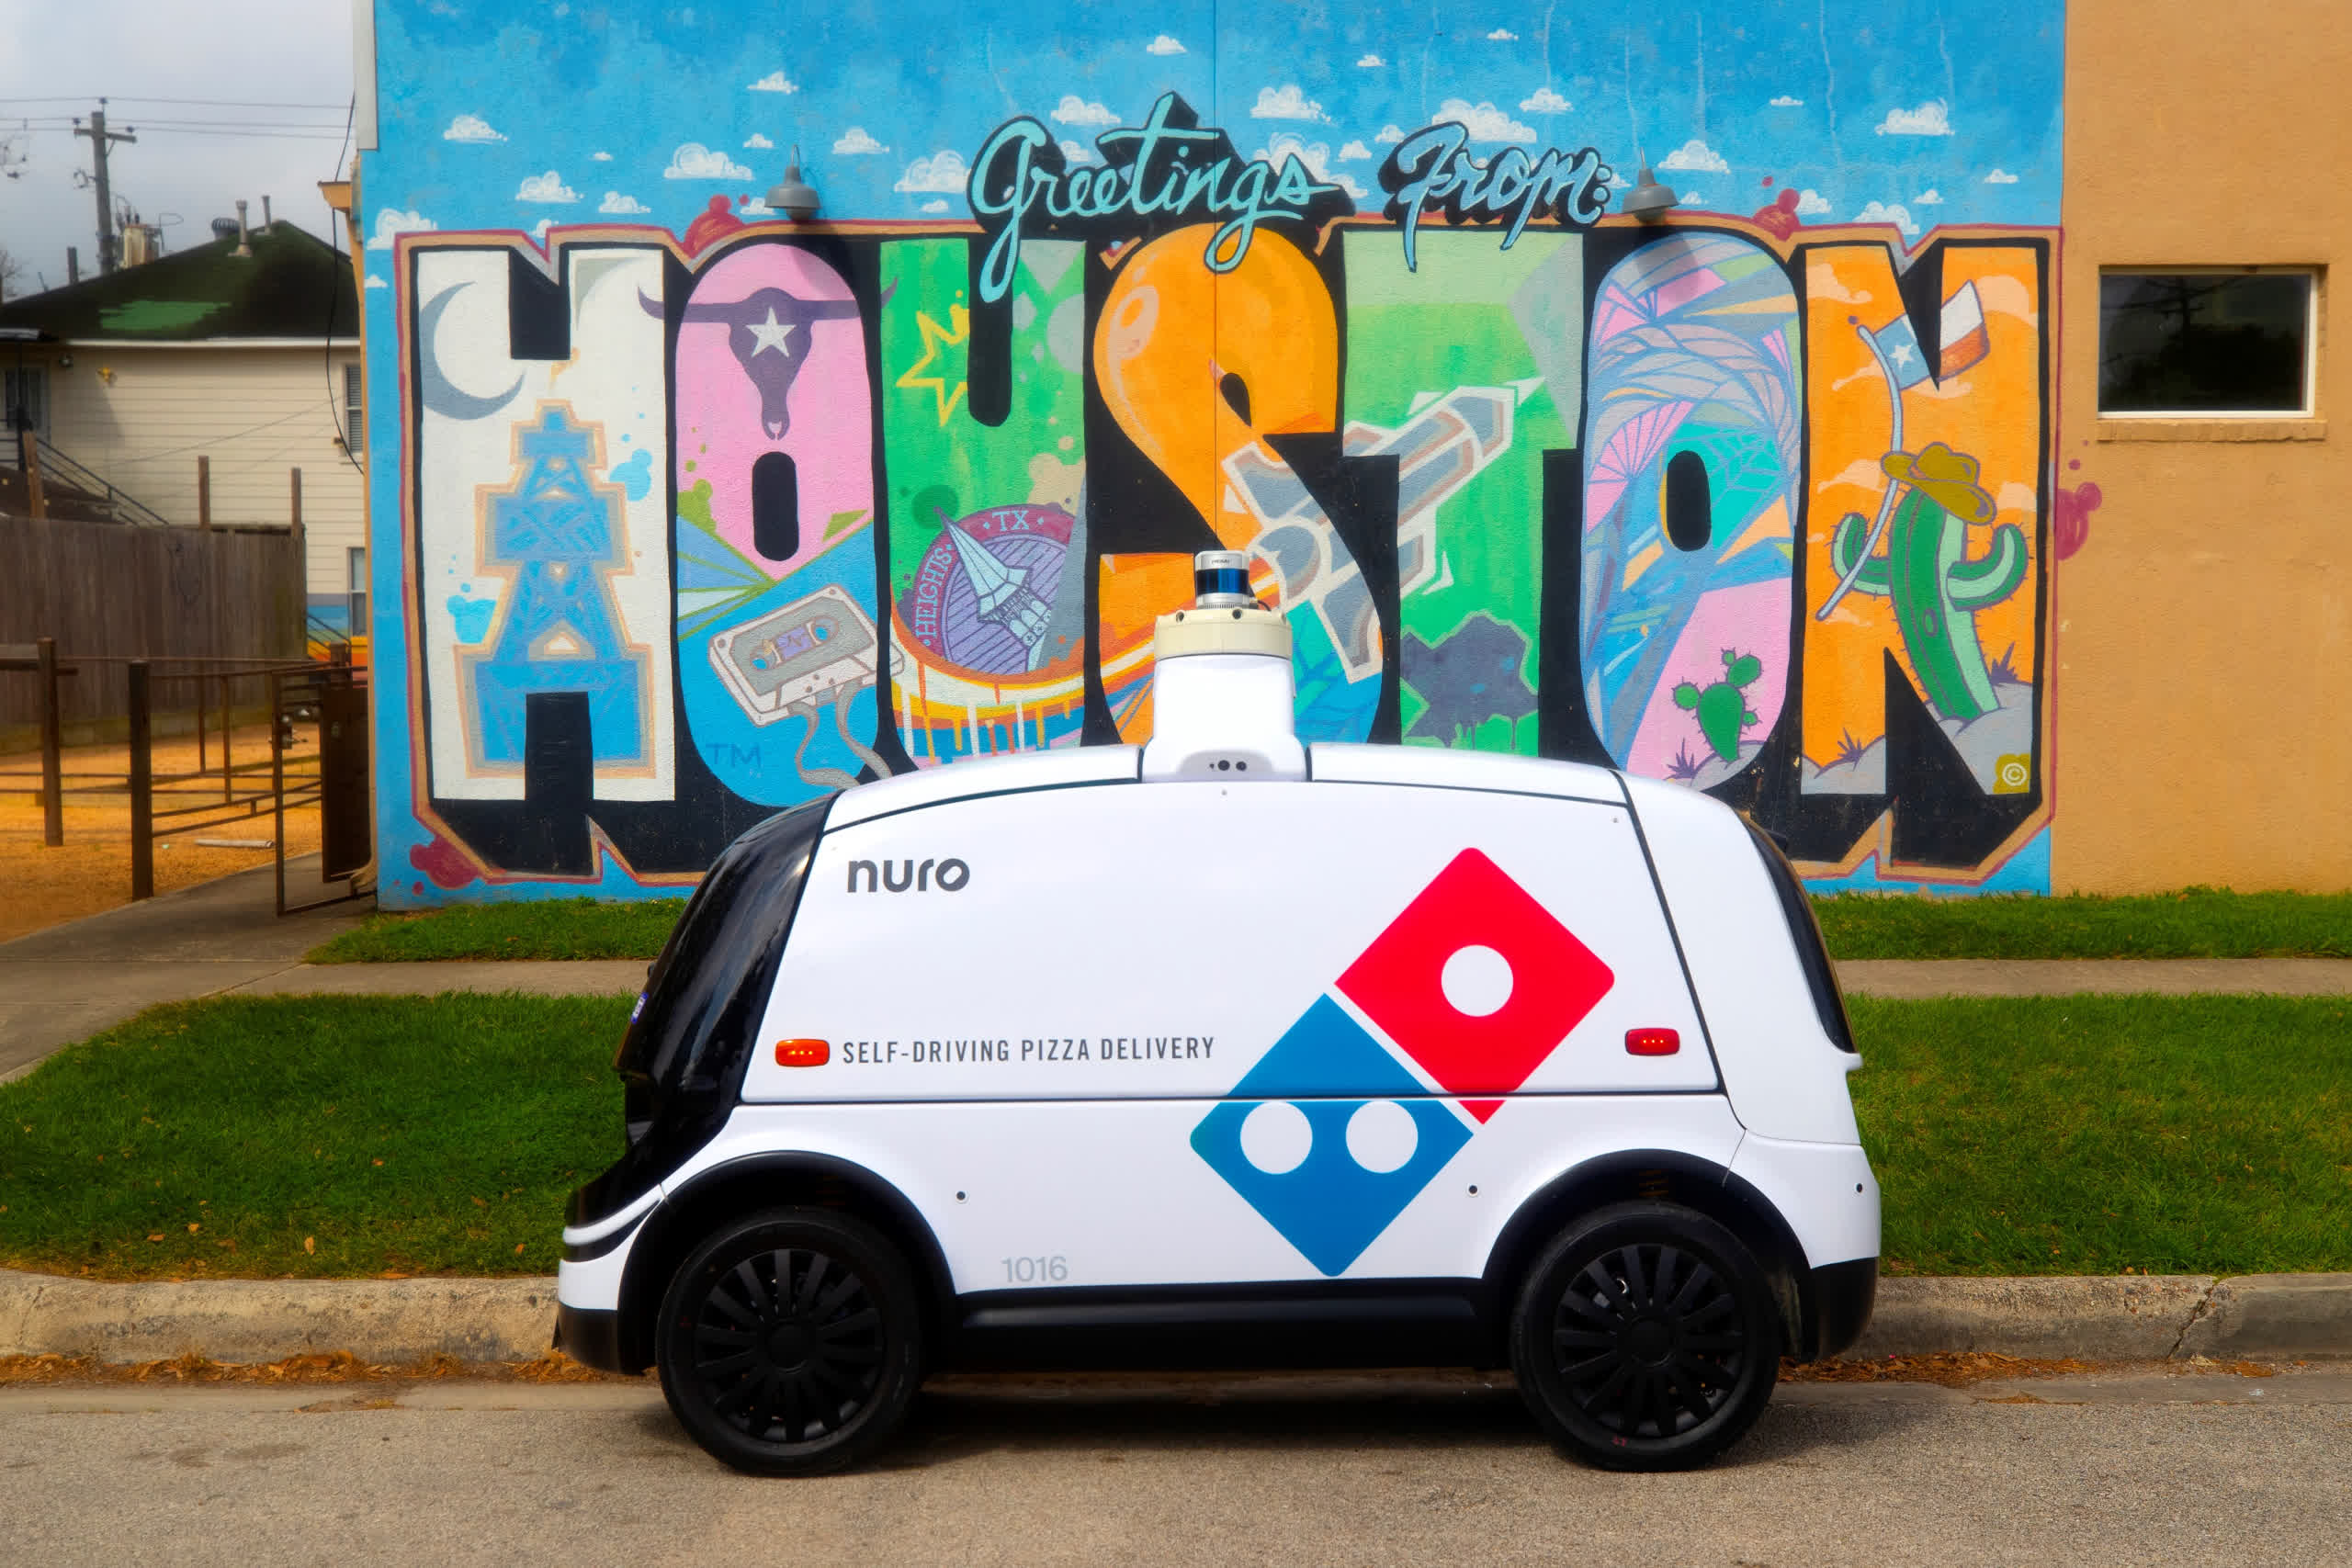 Domino's starts self-driving pizza delivery service with Nuro autonomous cars